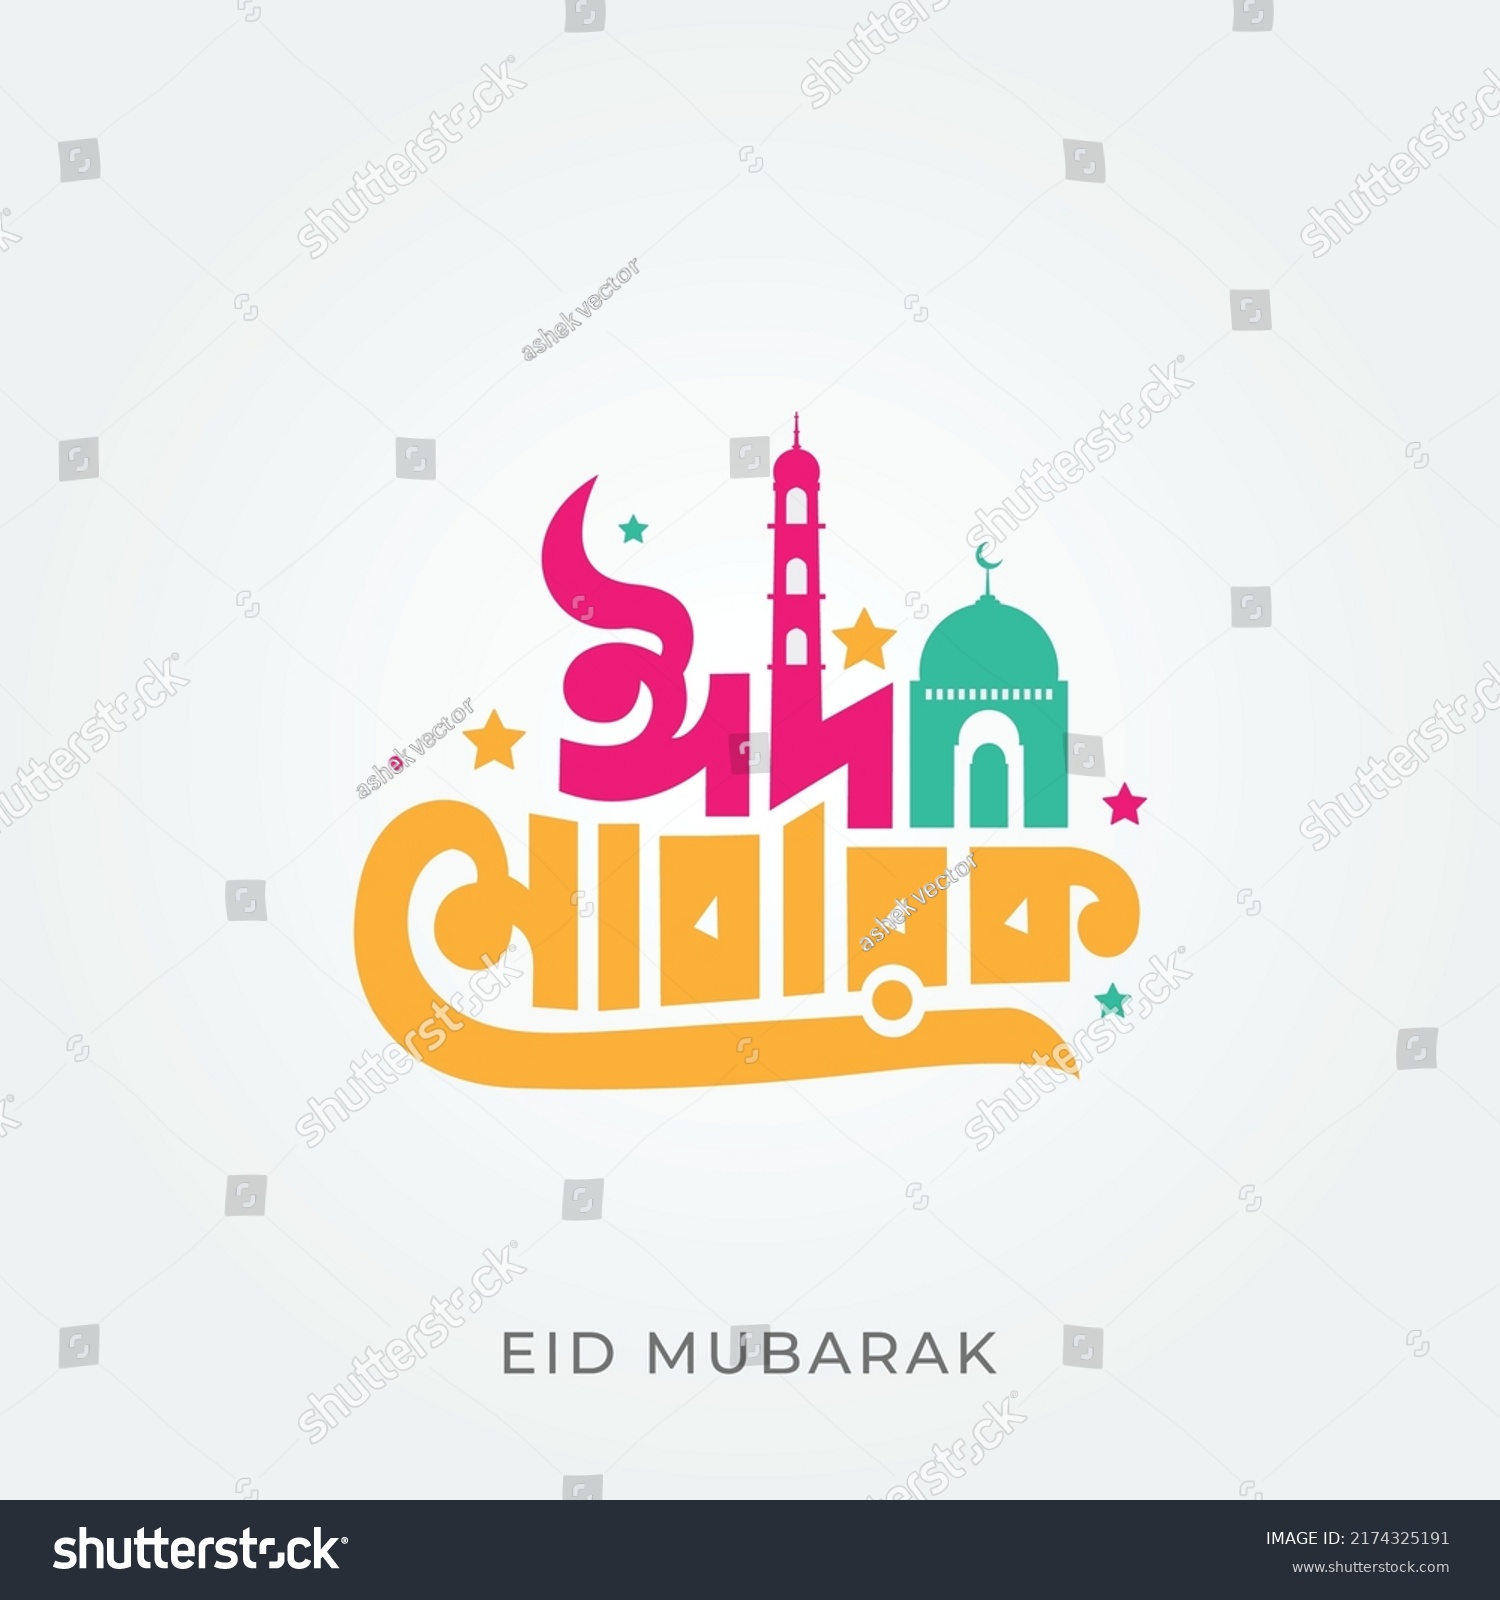 SVG of Eid Mubarak Bangla Typography and Calligraphy. Eid ul Fitr, Eid al Adha. Religious holiday celebrated by Muslims worldwide. Creative Idea, Concept Design for greeting Eid Mubarak. svg